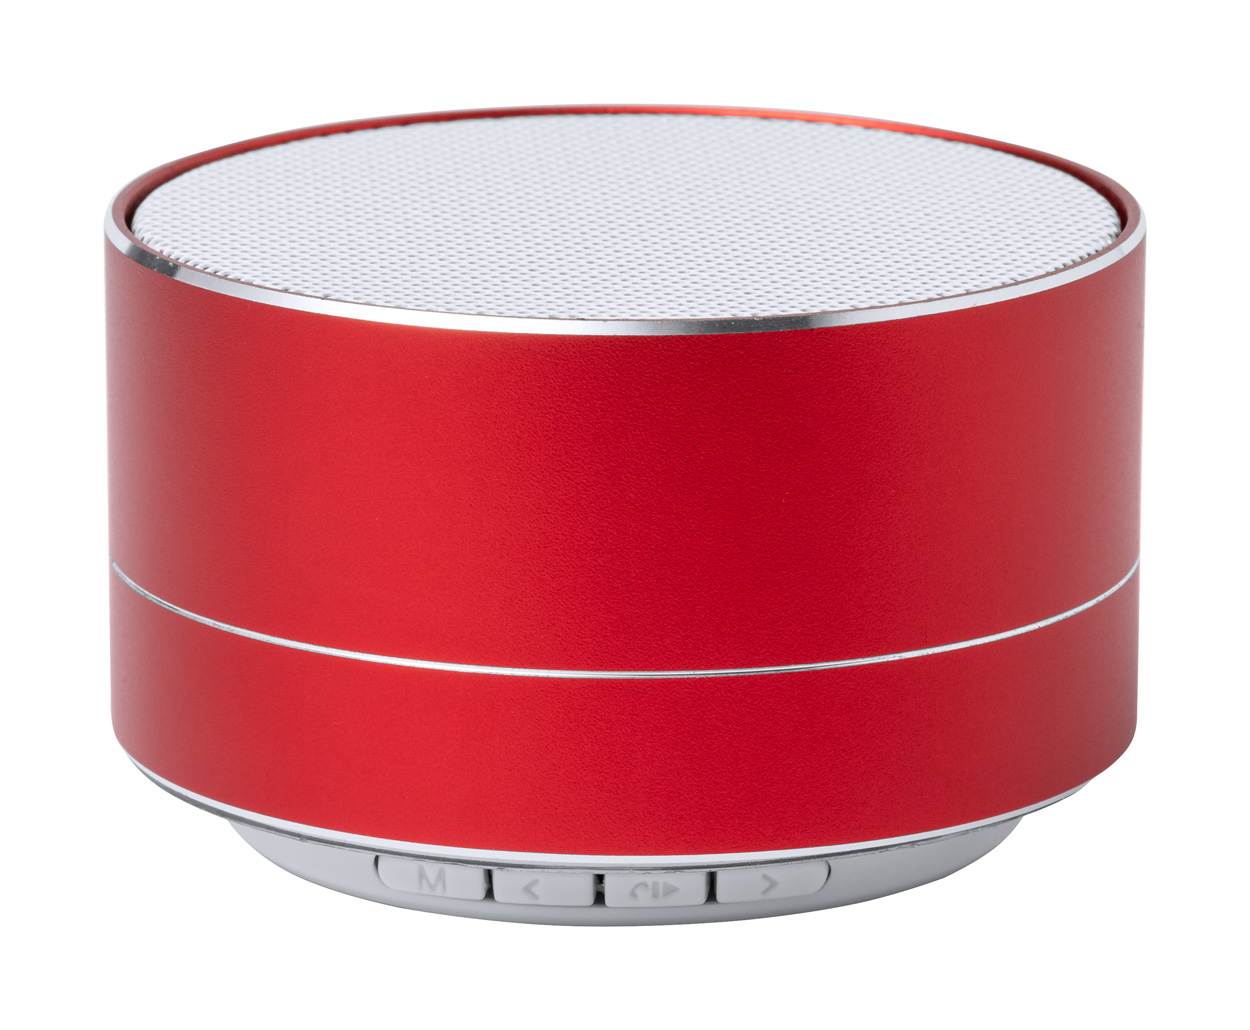 Skind bluetooth speaker - red